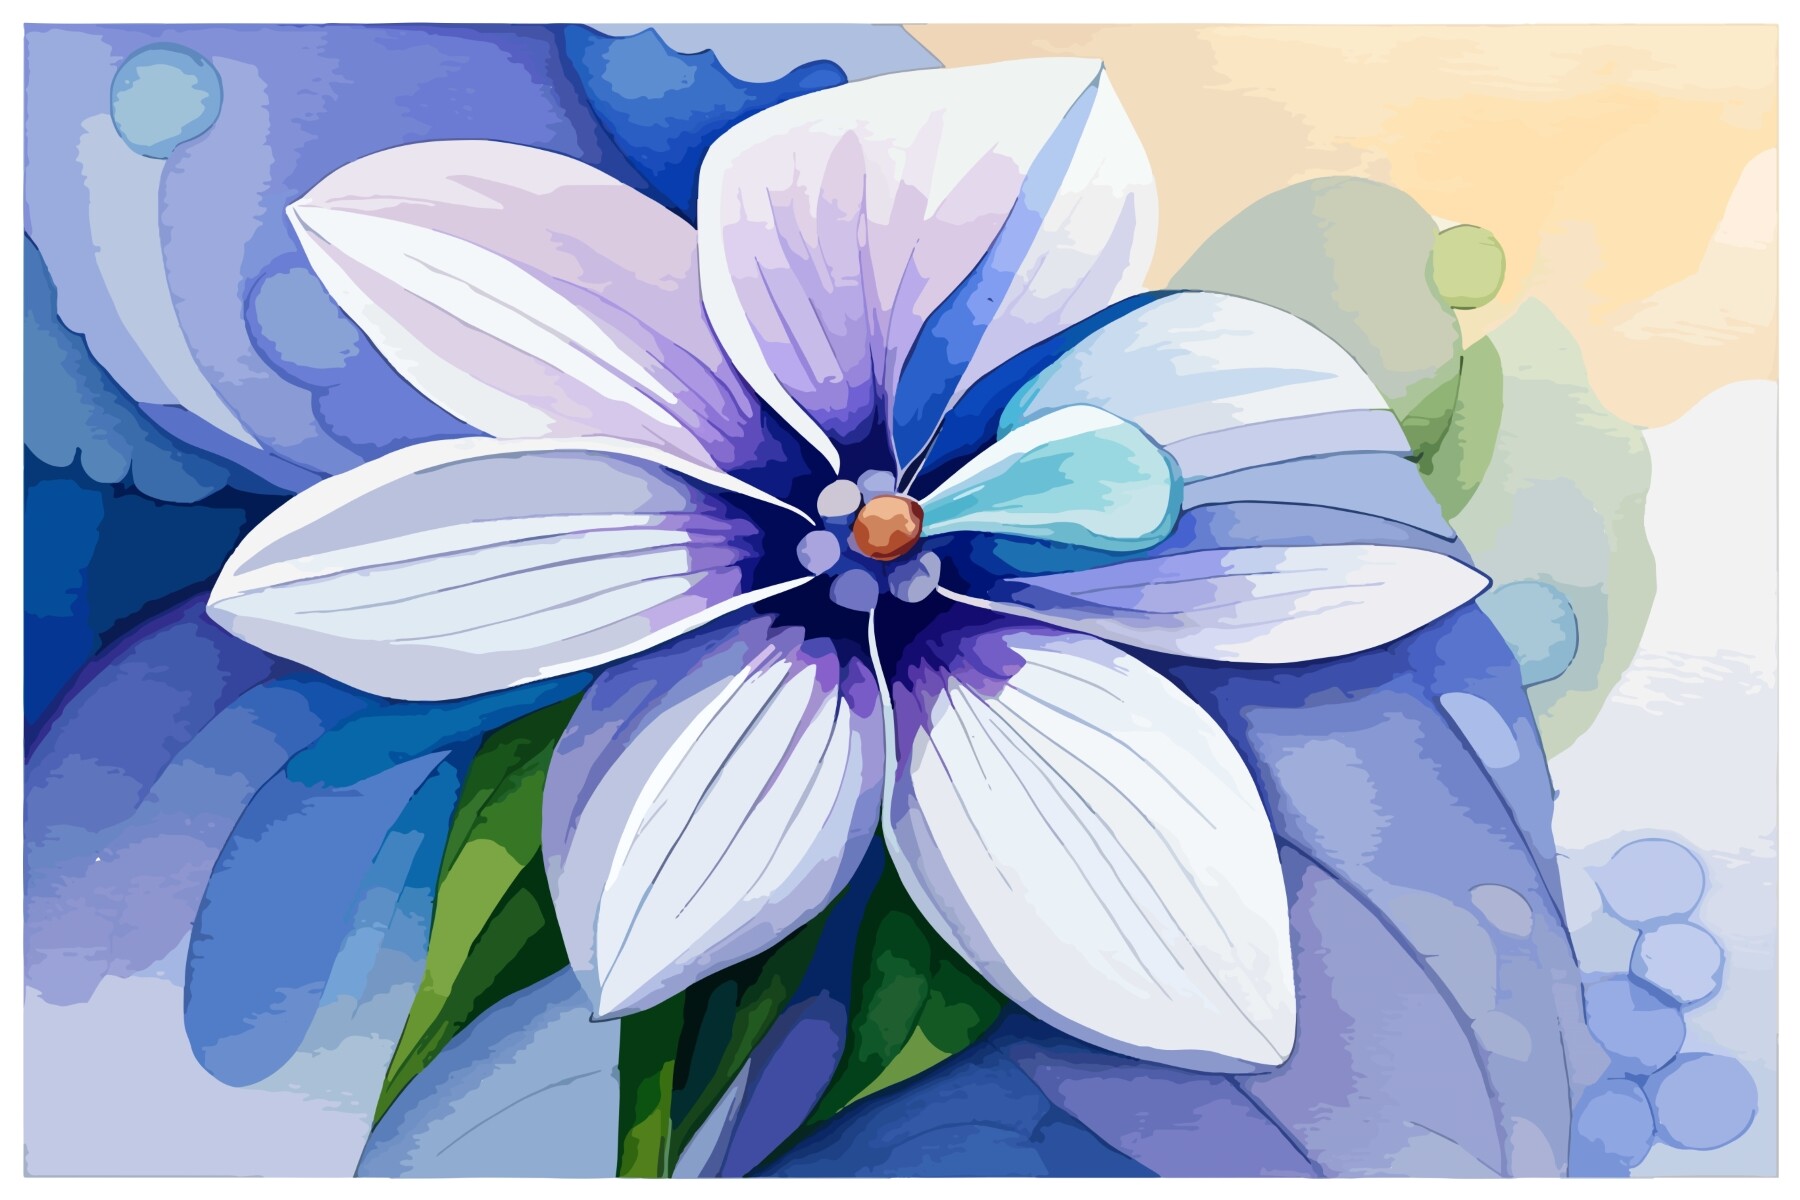 Periwinkle Flower Watercolor Art Graphic by Designbird · Creative Fabrica